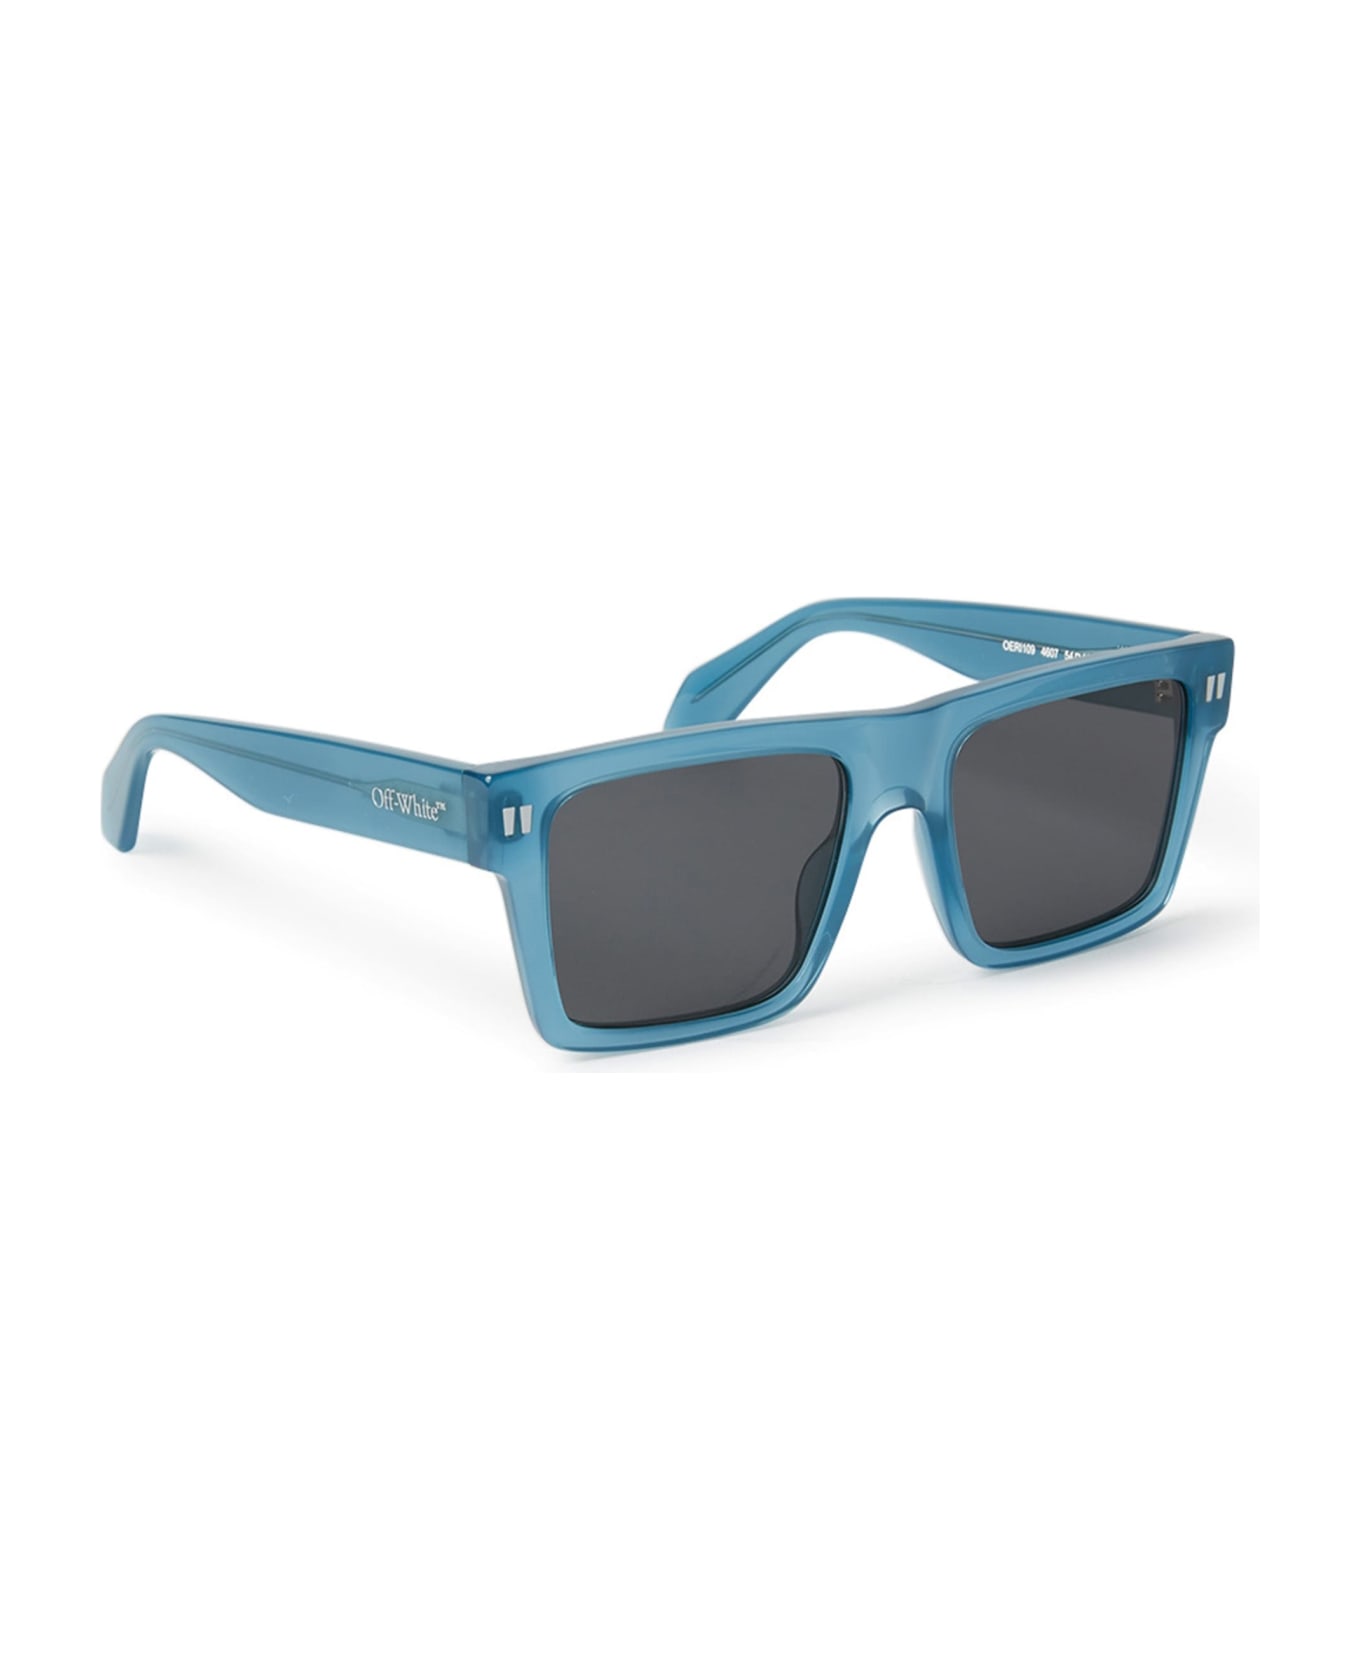 Off-White Lawton Sunglasses - blue サングラス